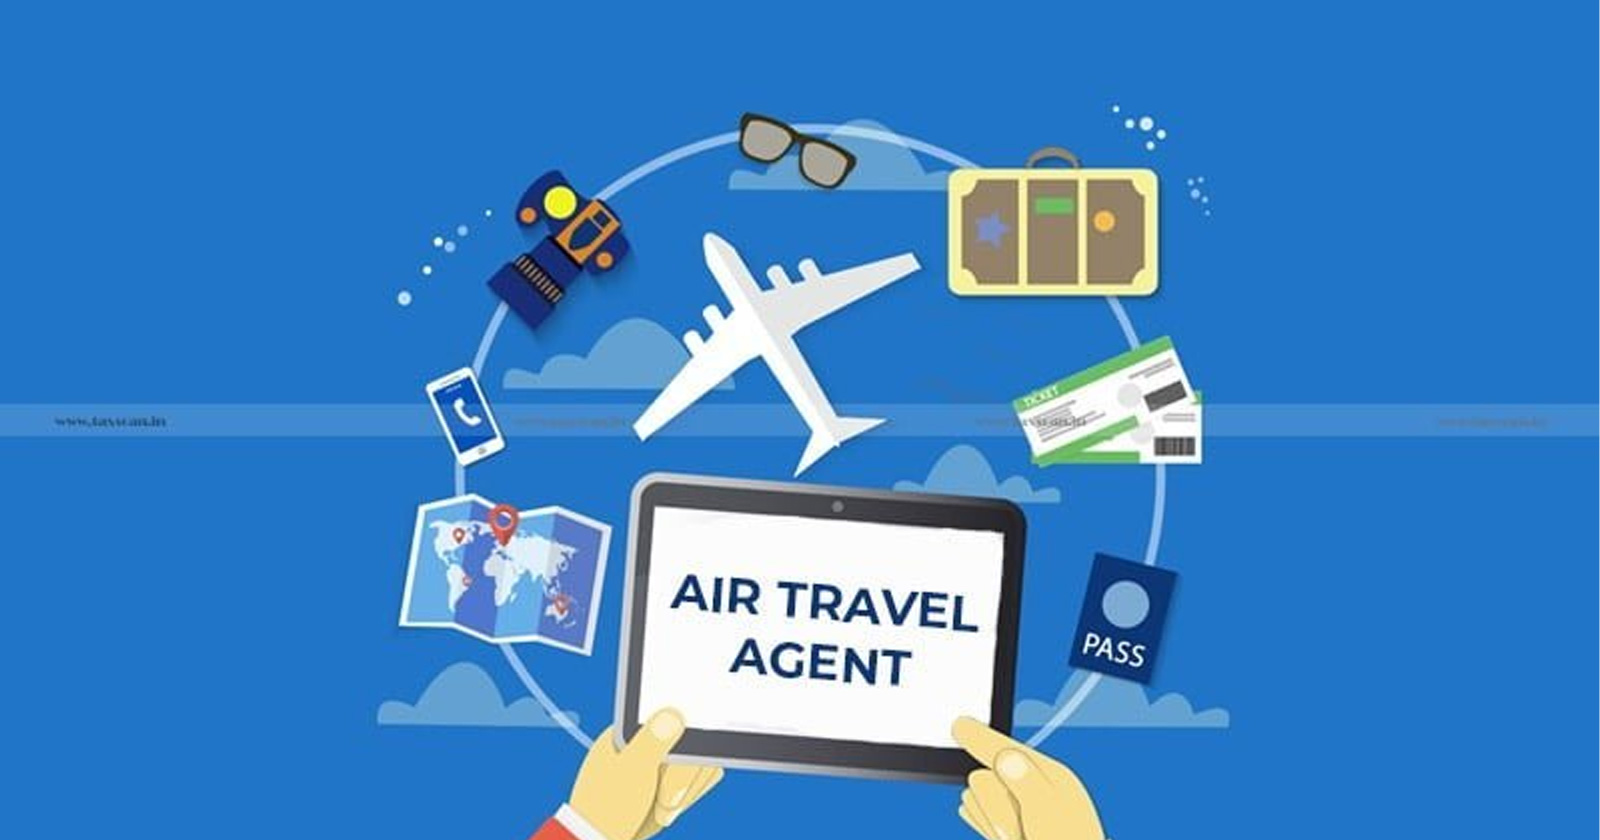 CESTAT Delhi - CESTAT - Service Tax - Travel itinerary - Air travel agent - taxscan